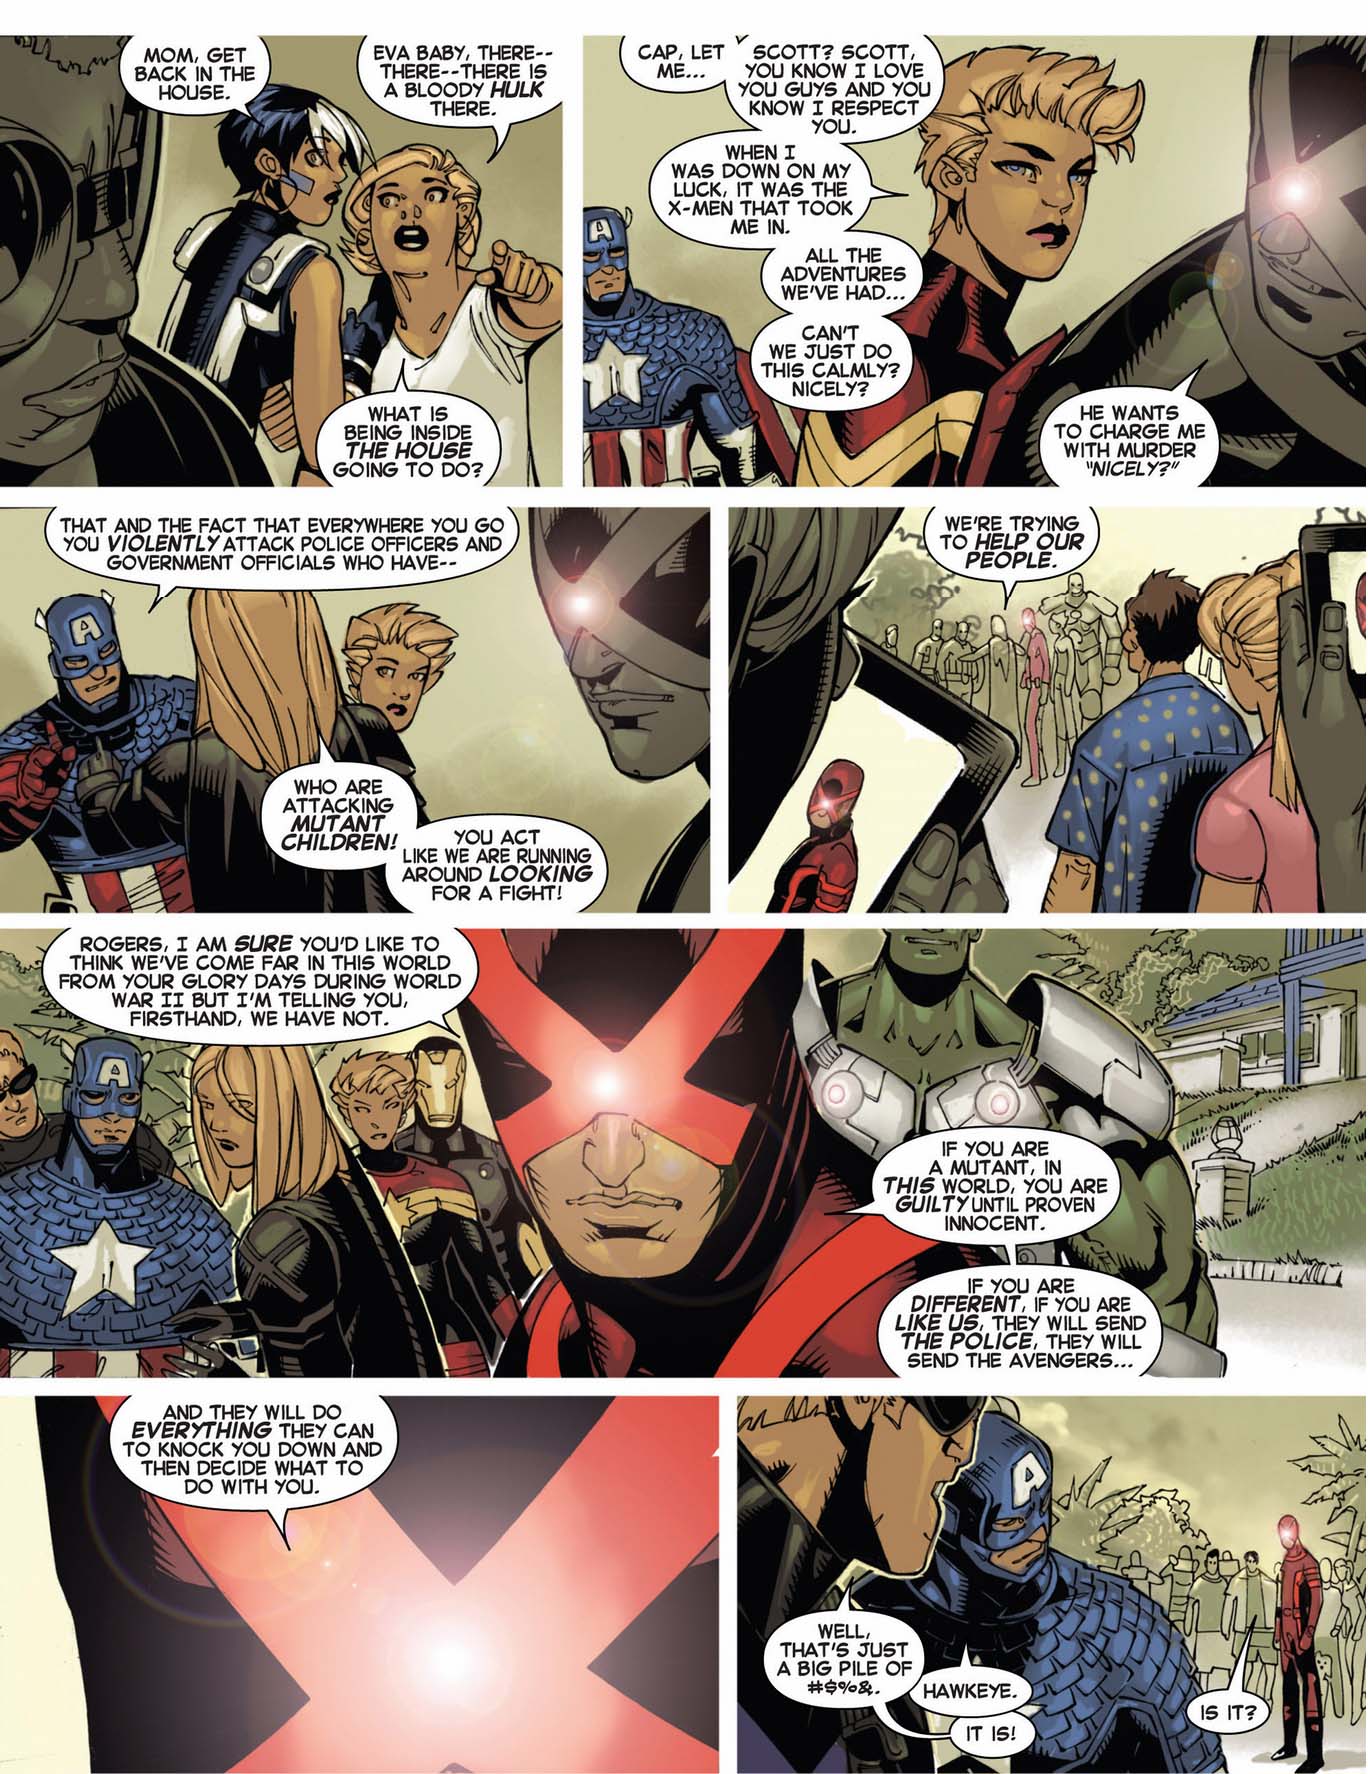 cyclops-educating-captain-america-on-mutant-rights.jpg